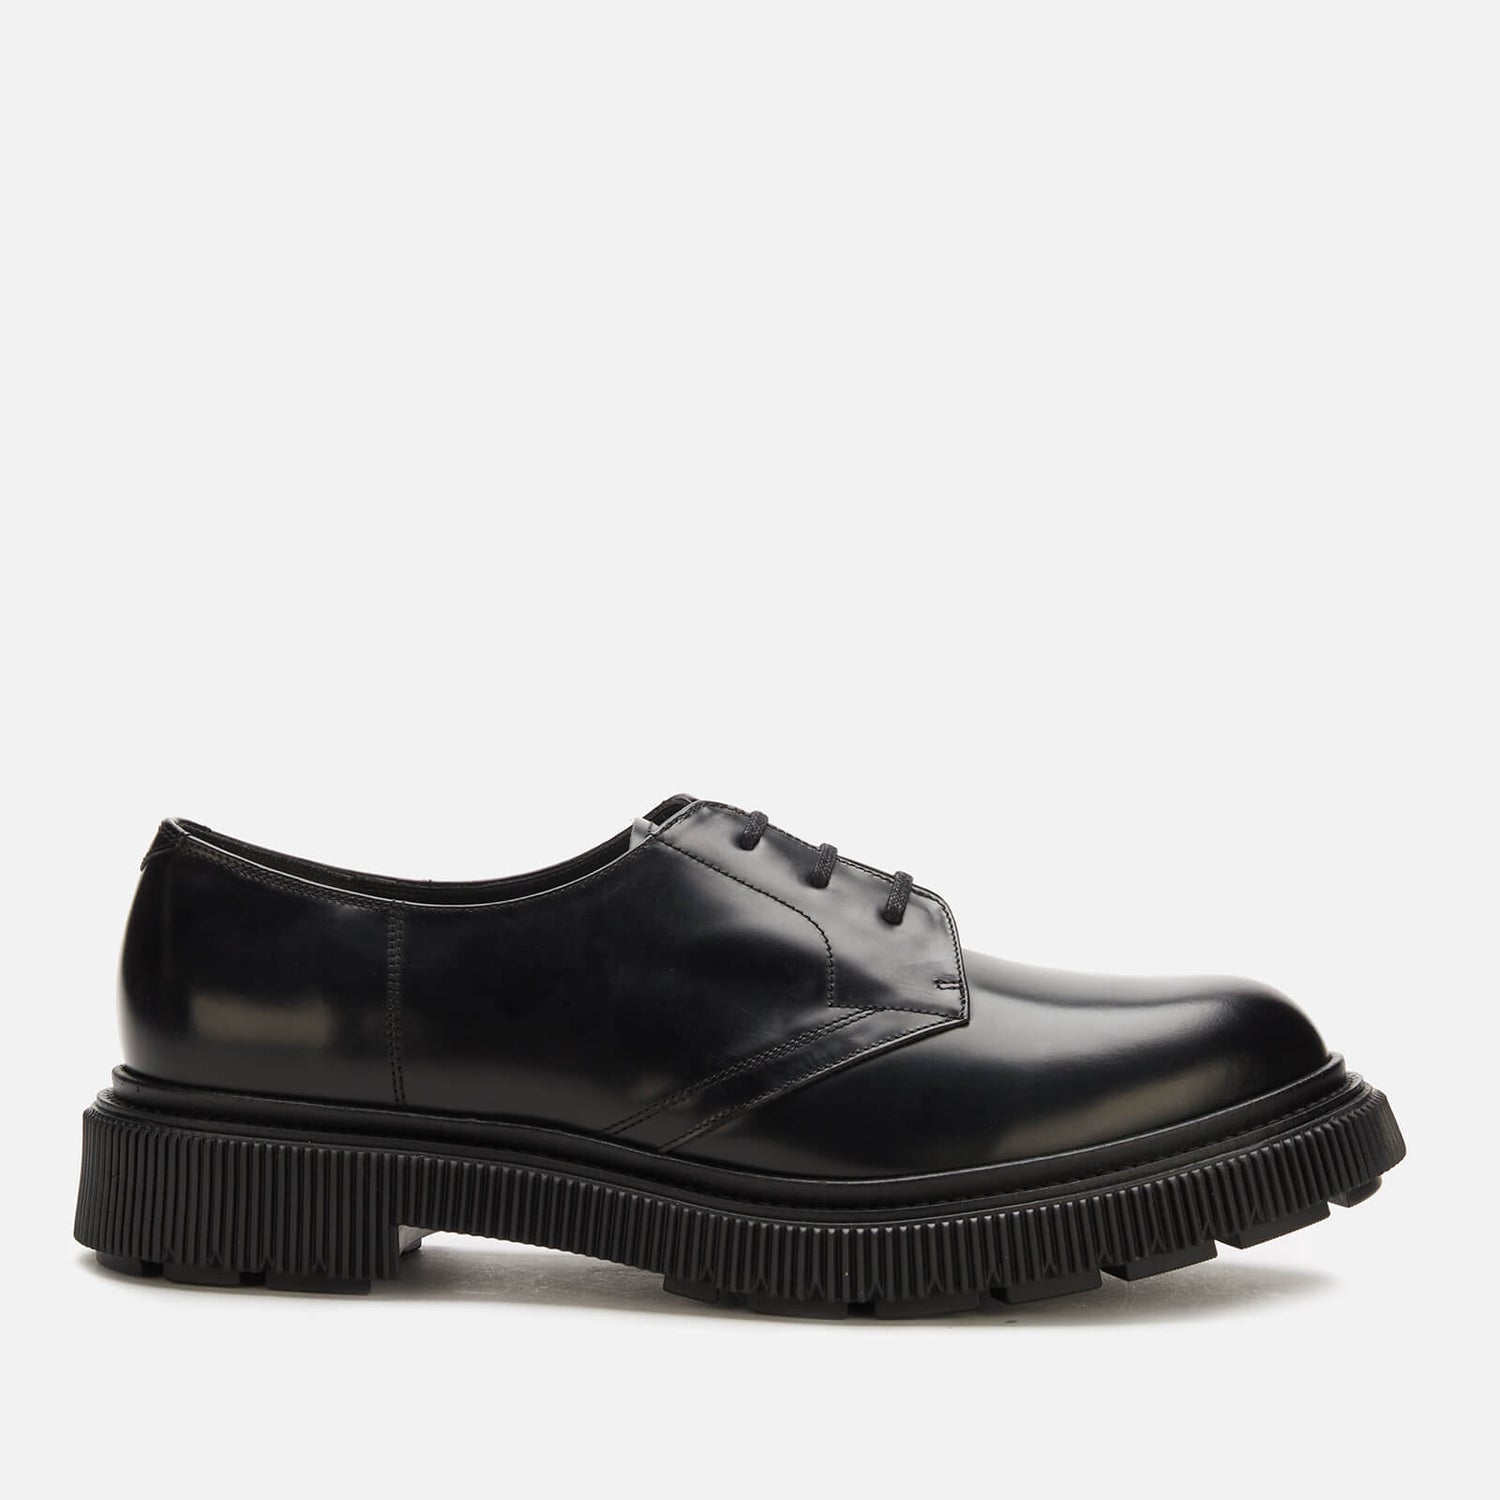 Adieu Men's Type 132 Leather Derby Shoes - Black - UK 7